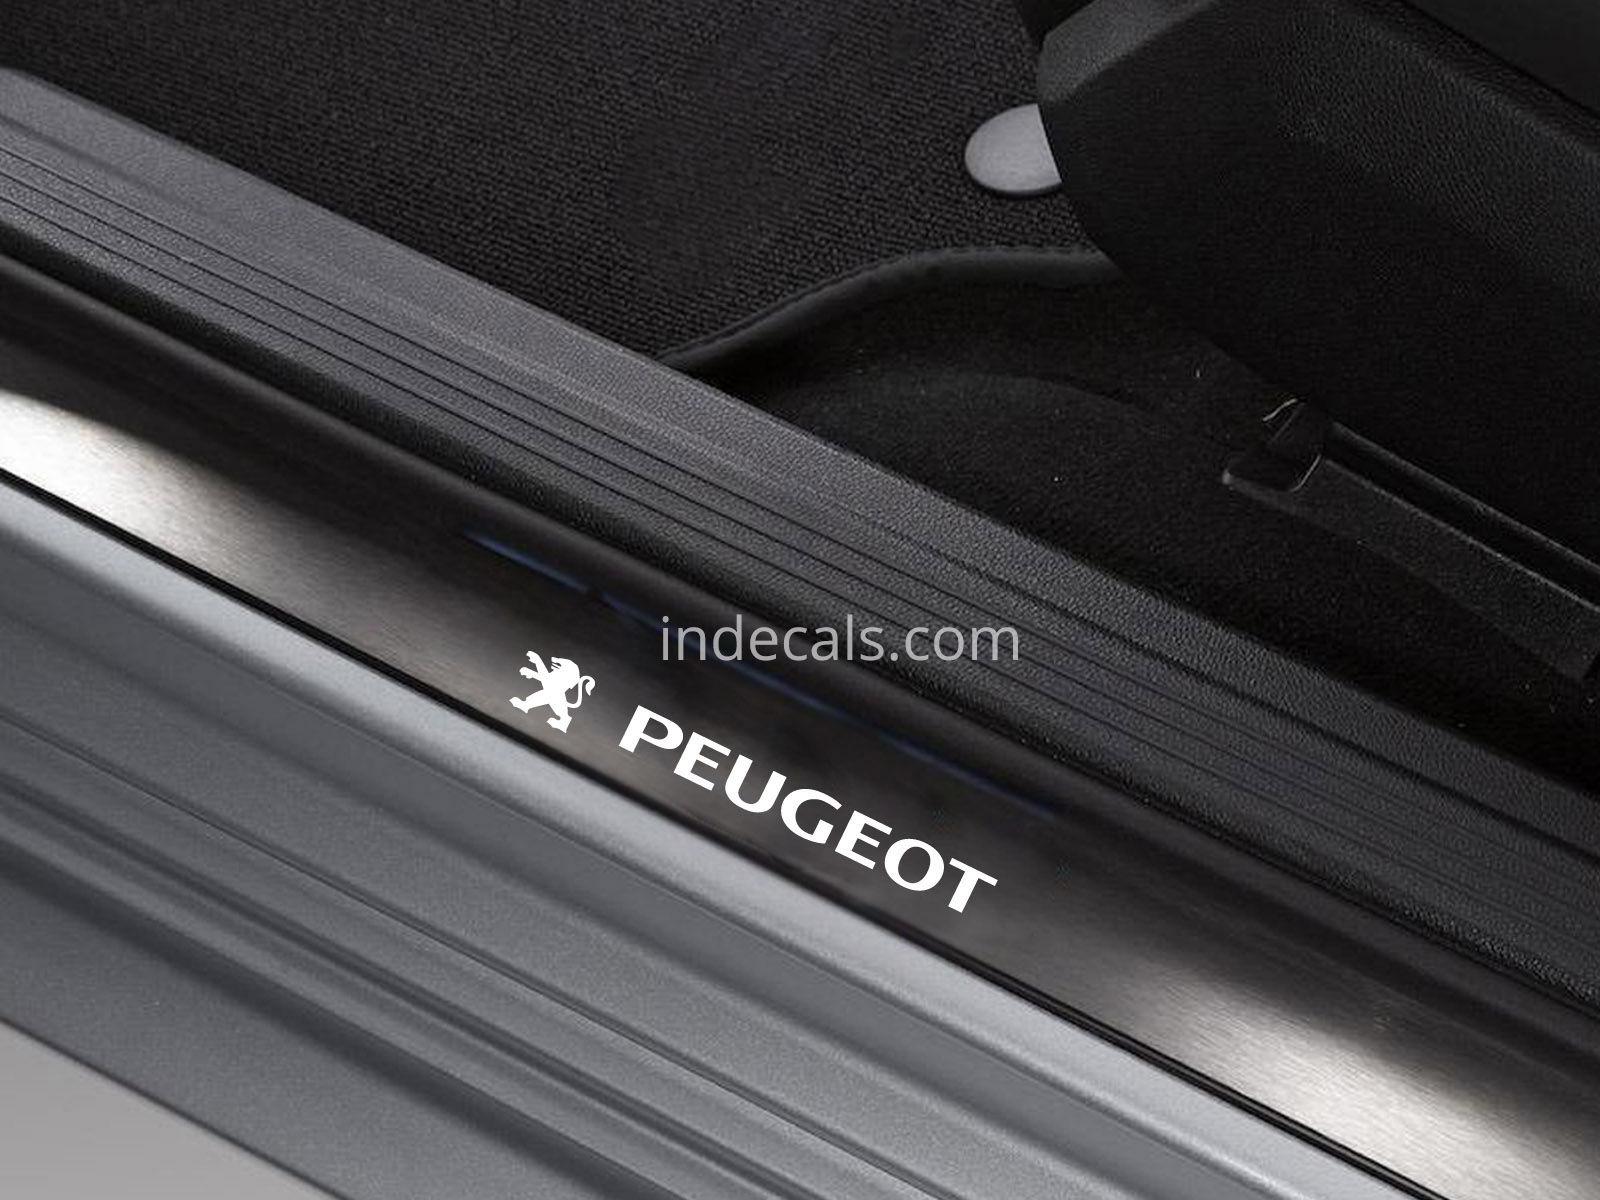 6 x Peugeot Stickers for Door Sills - White